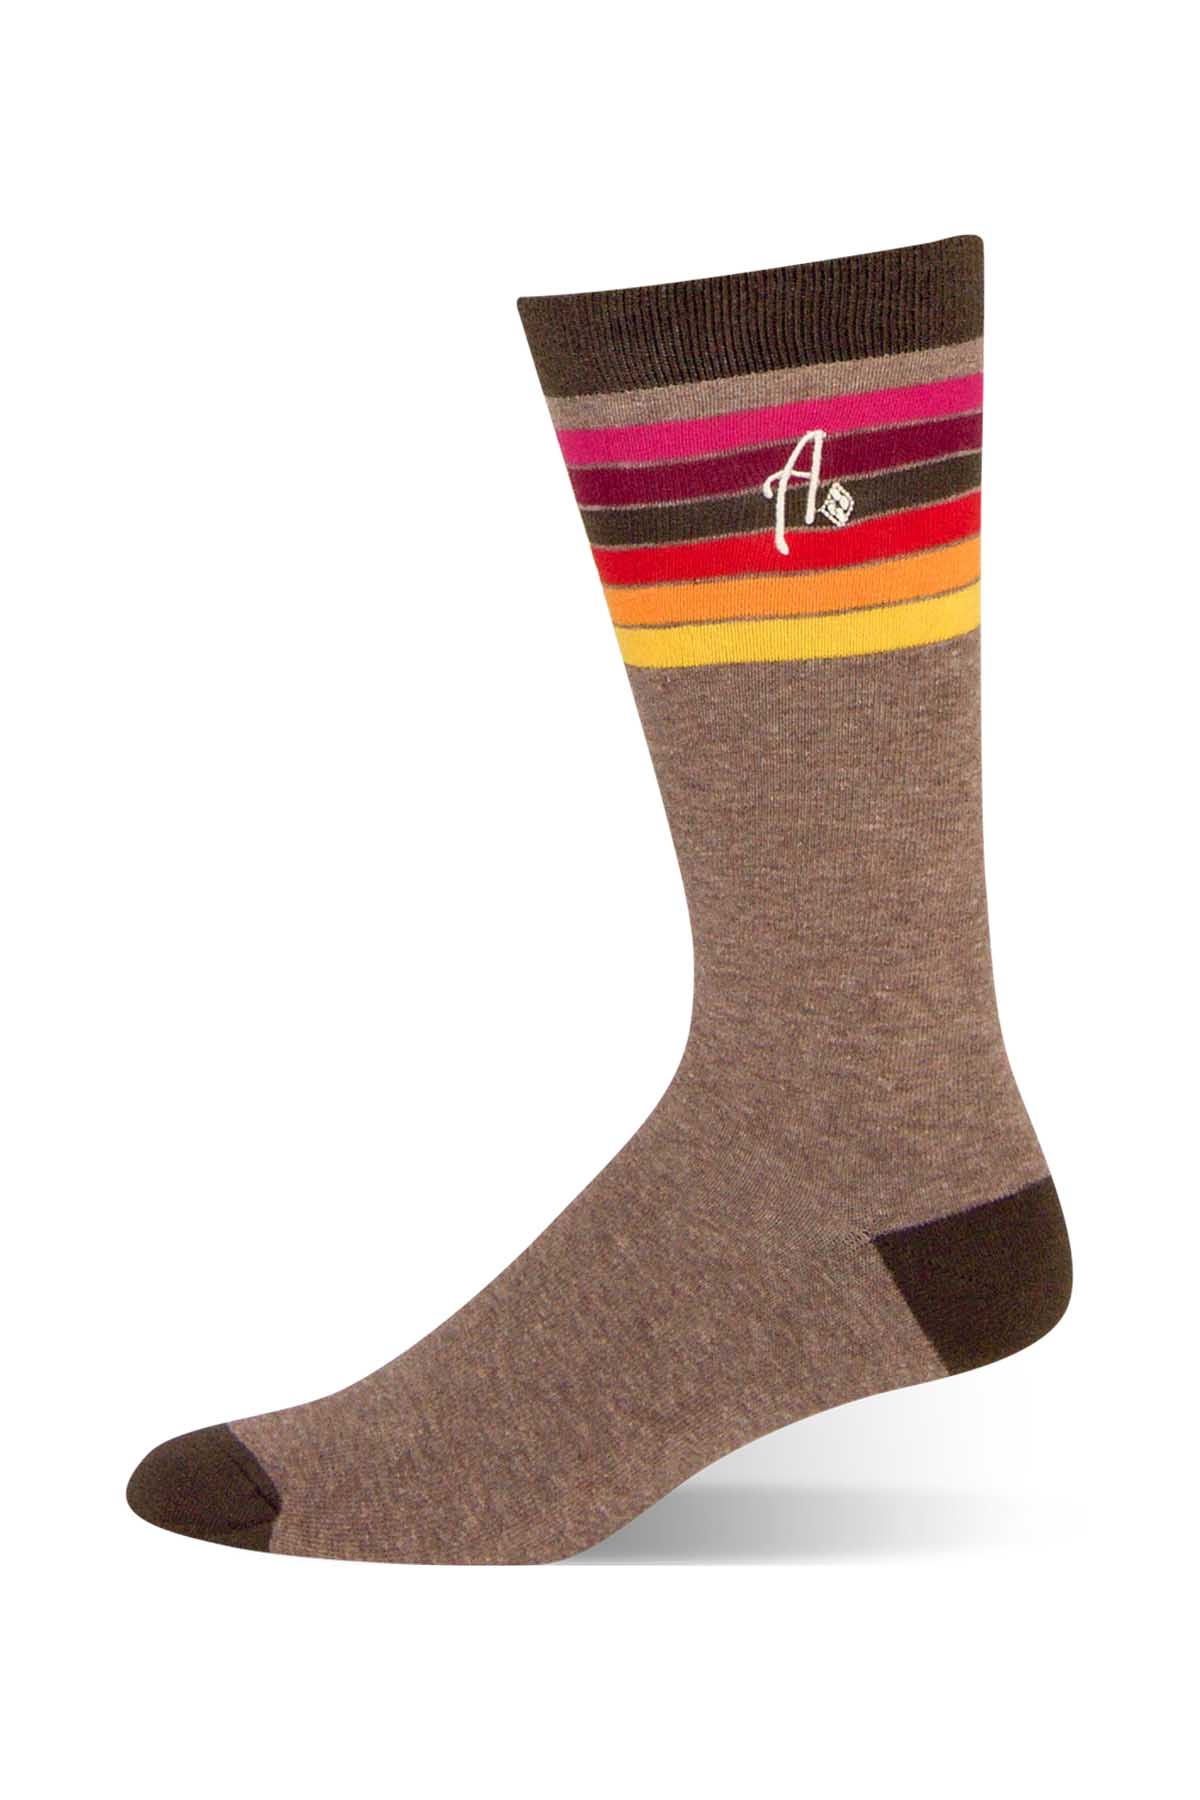 Argoz Driftwood Women's Sock